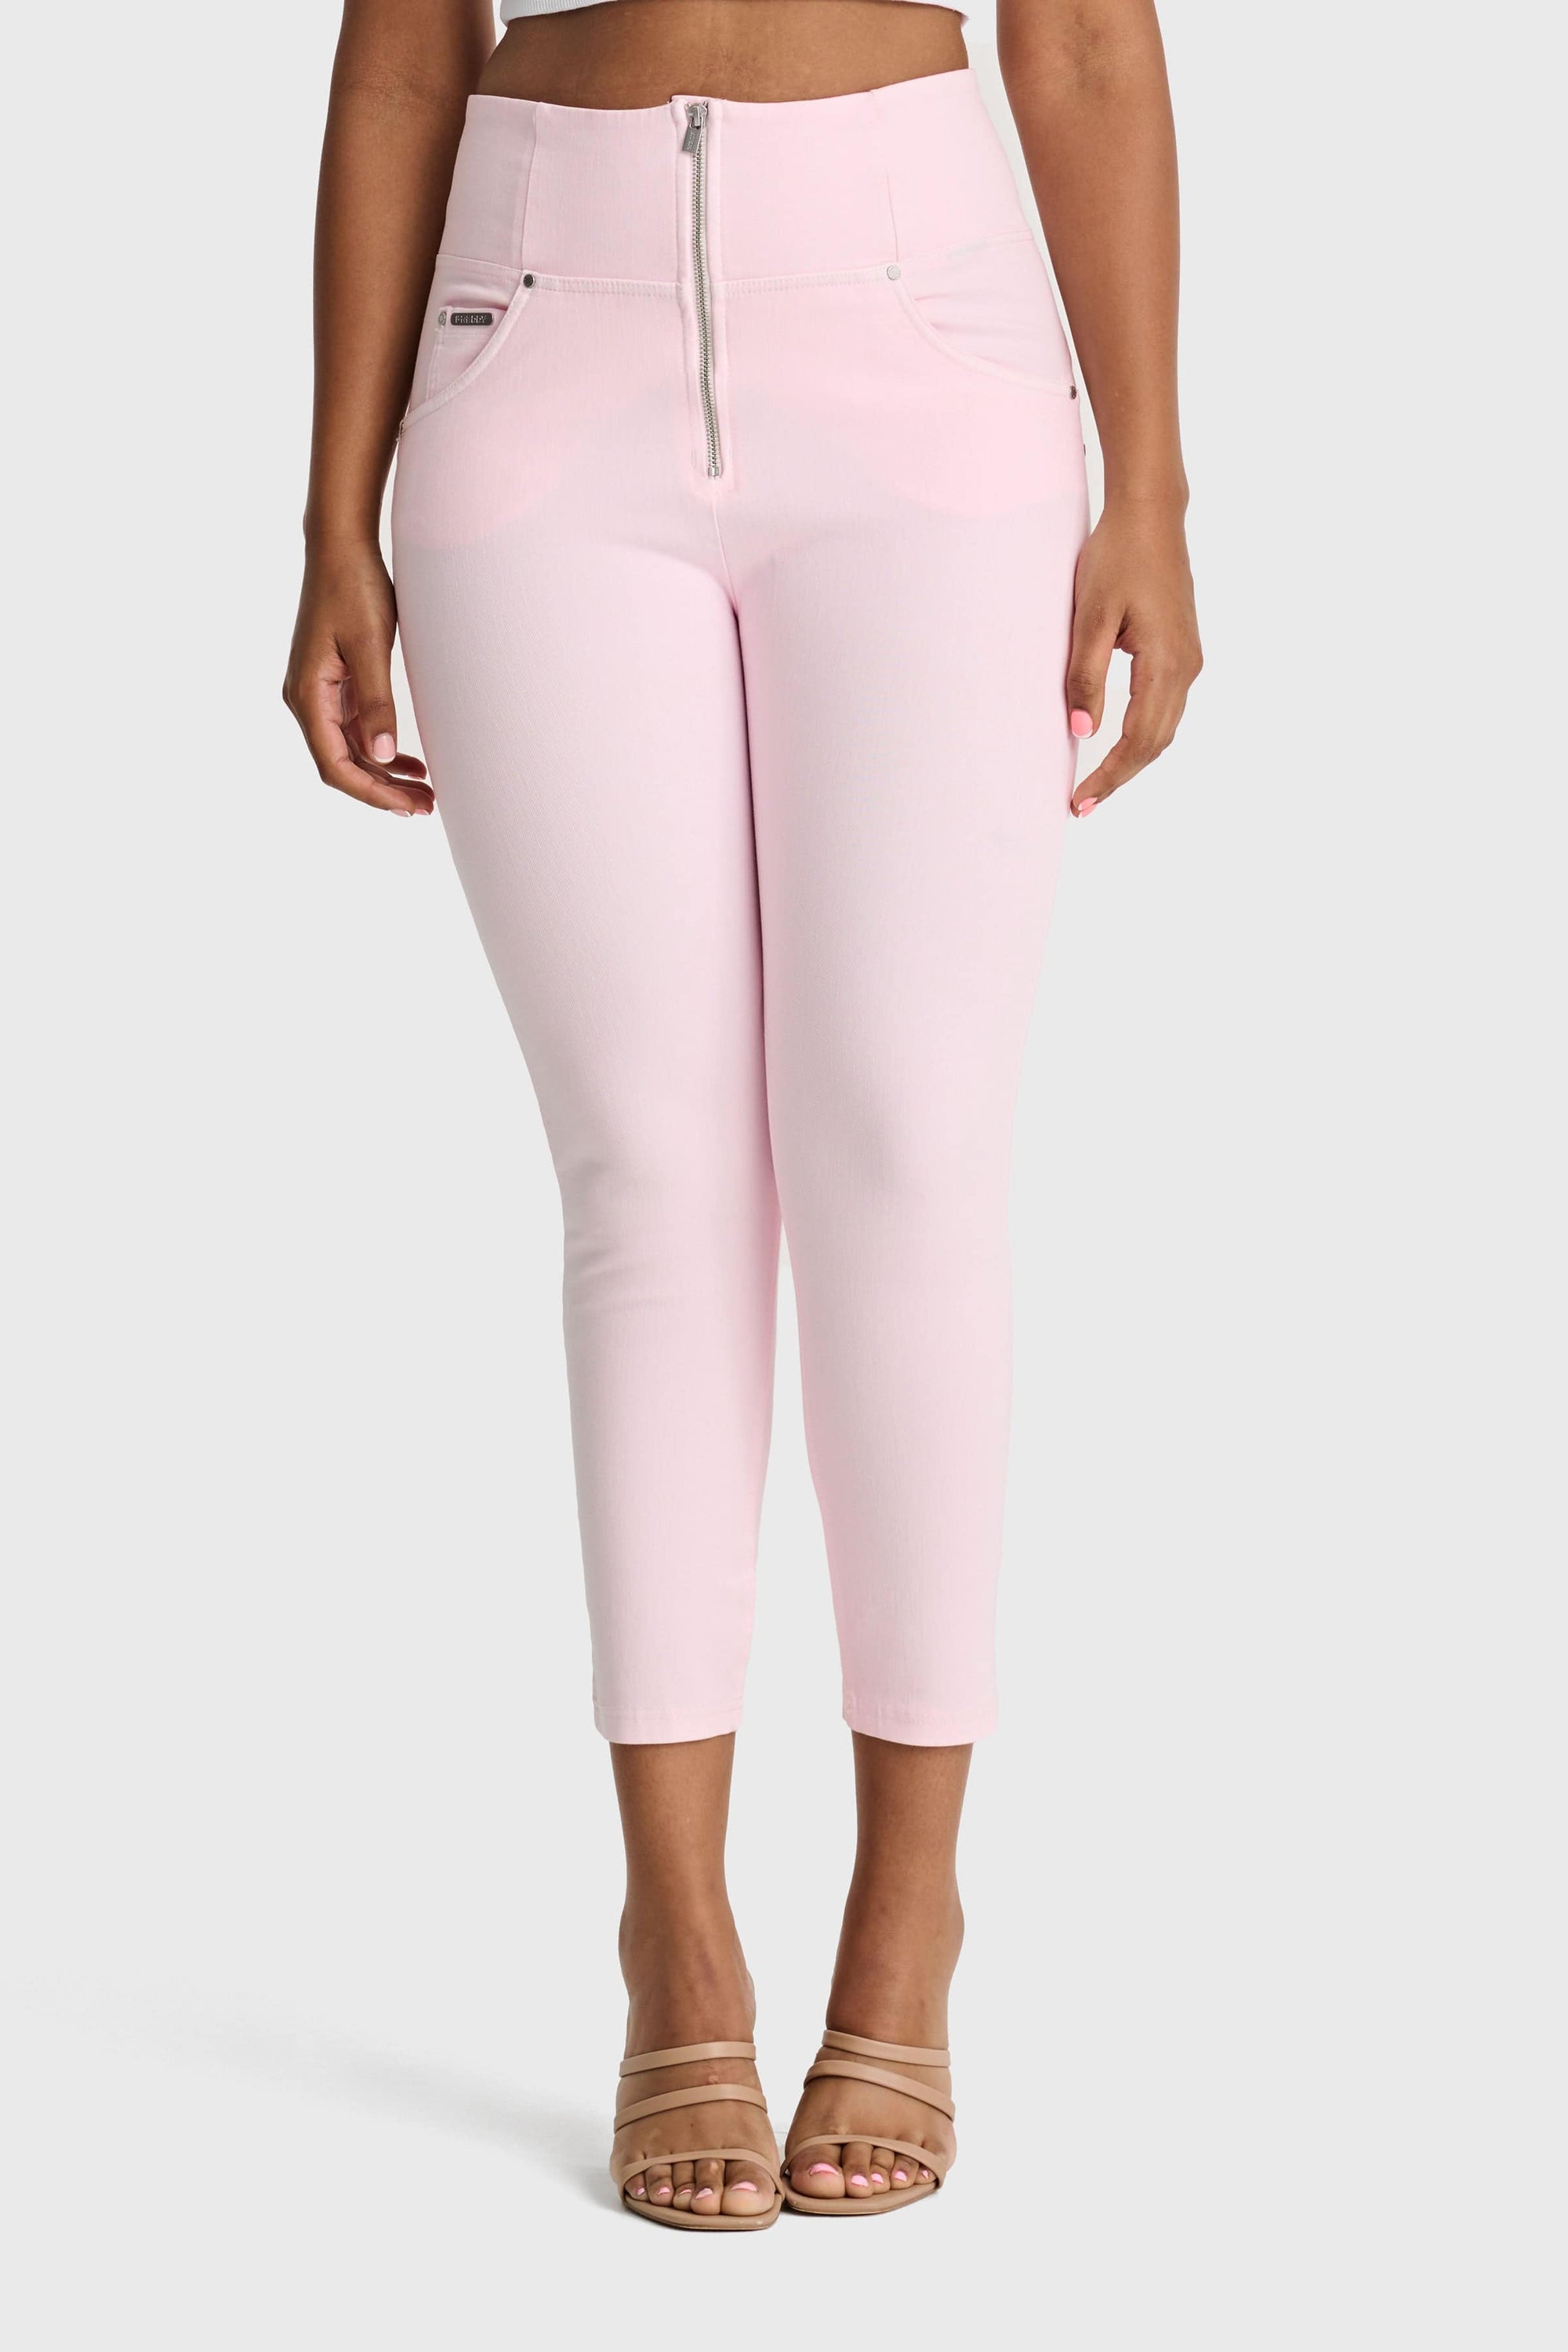 WR.UP® Snug Curvy Jeans - High Waisted - 7/8 Length - Baby Pink 5